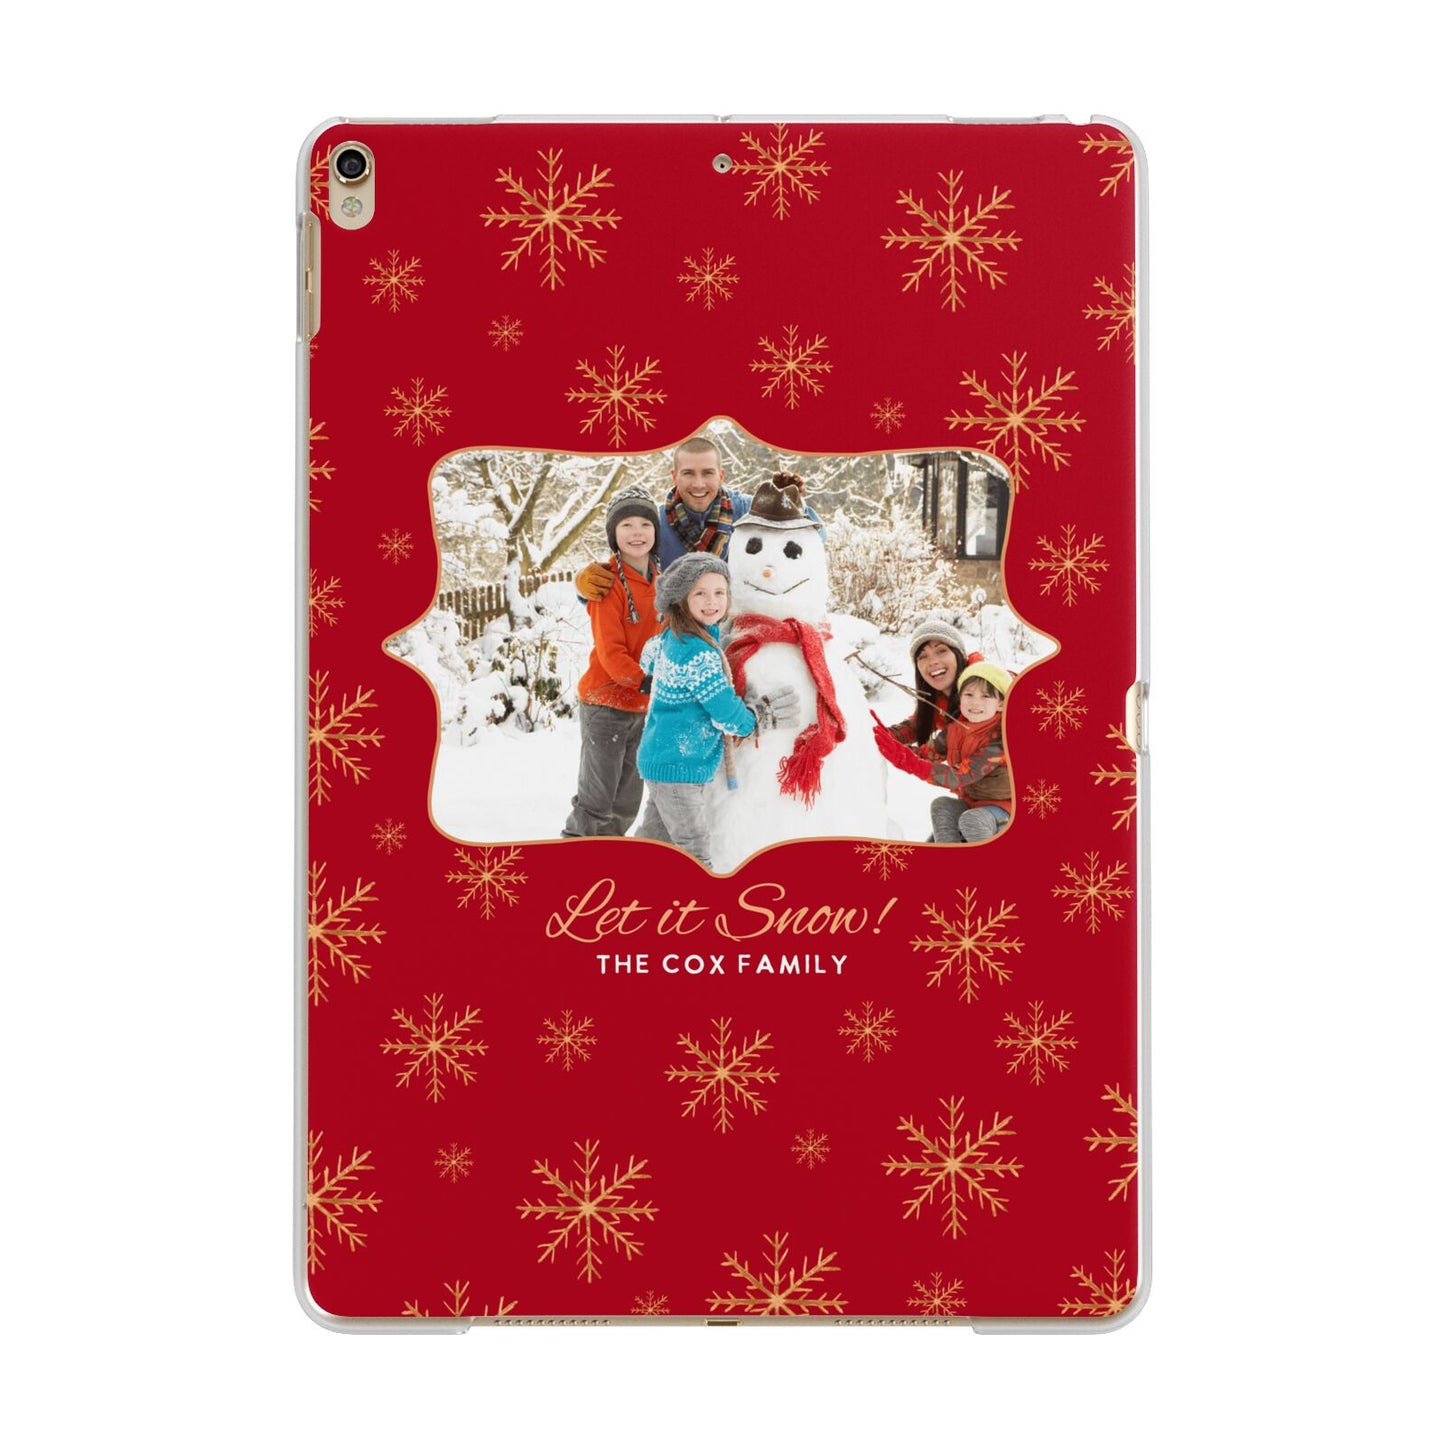 Let it Snow Christmas Photo Upload Apple iPad Gold Case